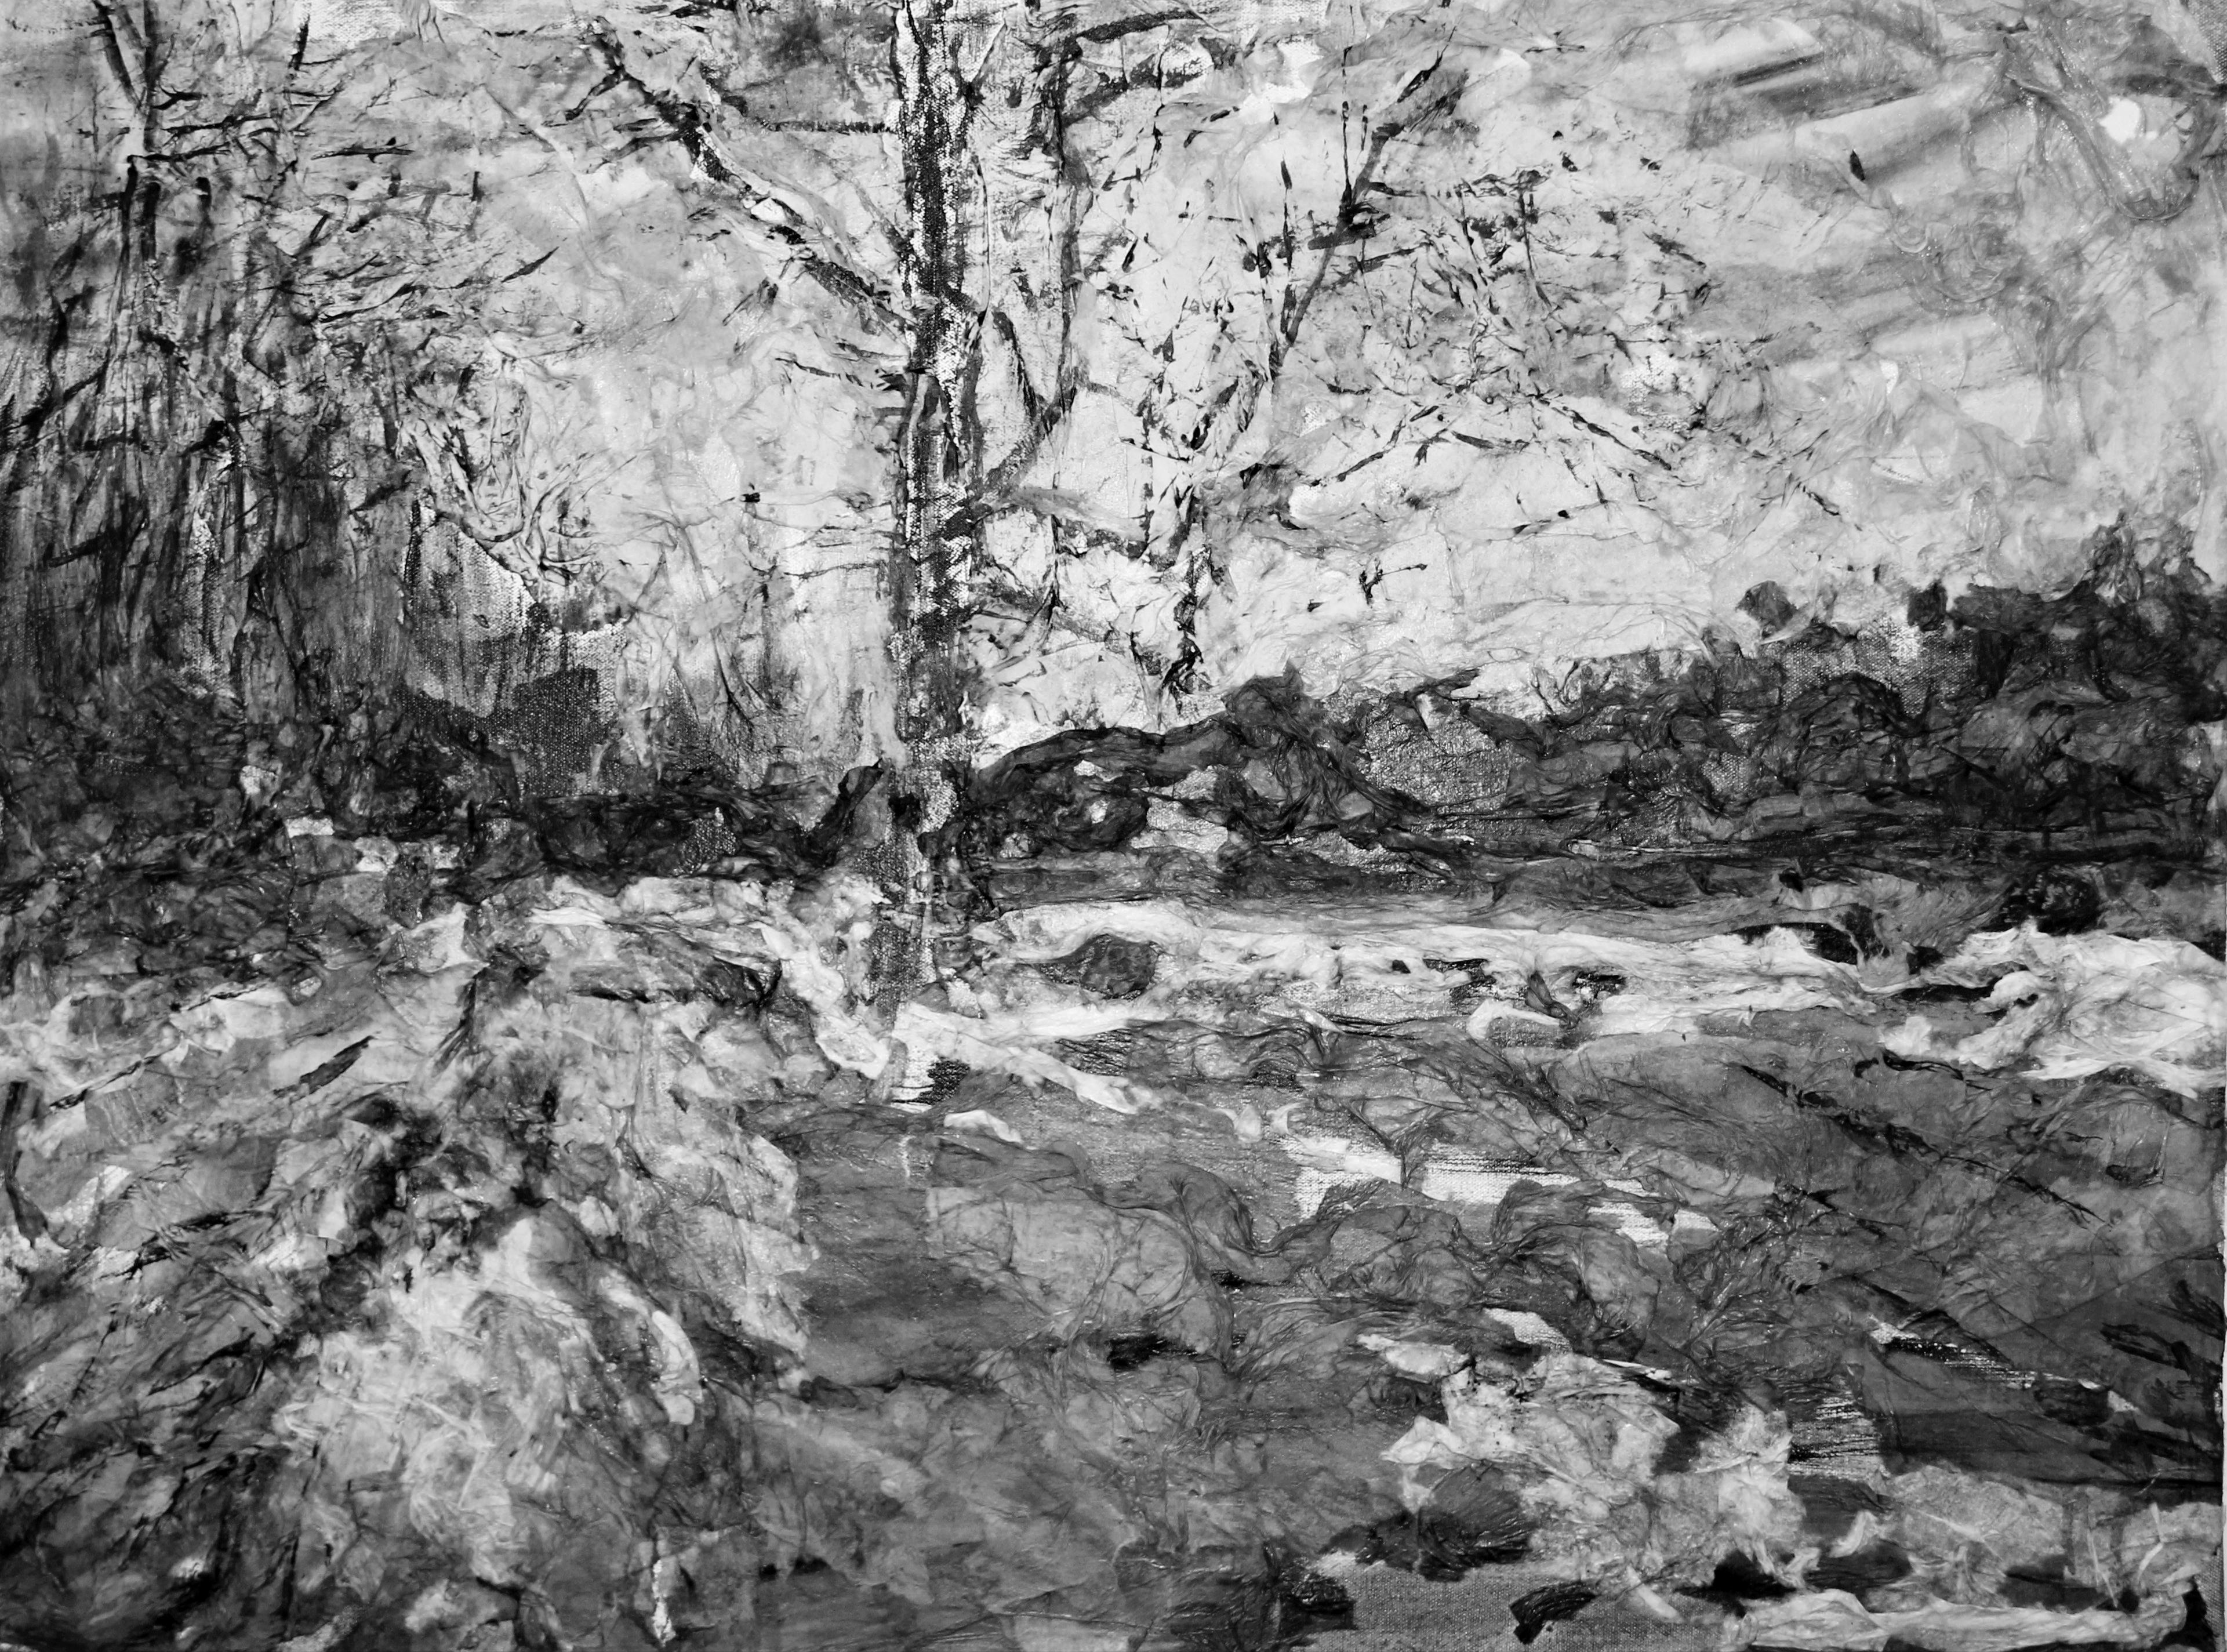 Landscape Painting AsyaDodina SlavaPolishchuk - Caumsett V, paysage monochrome, noir et blanc et gris